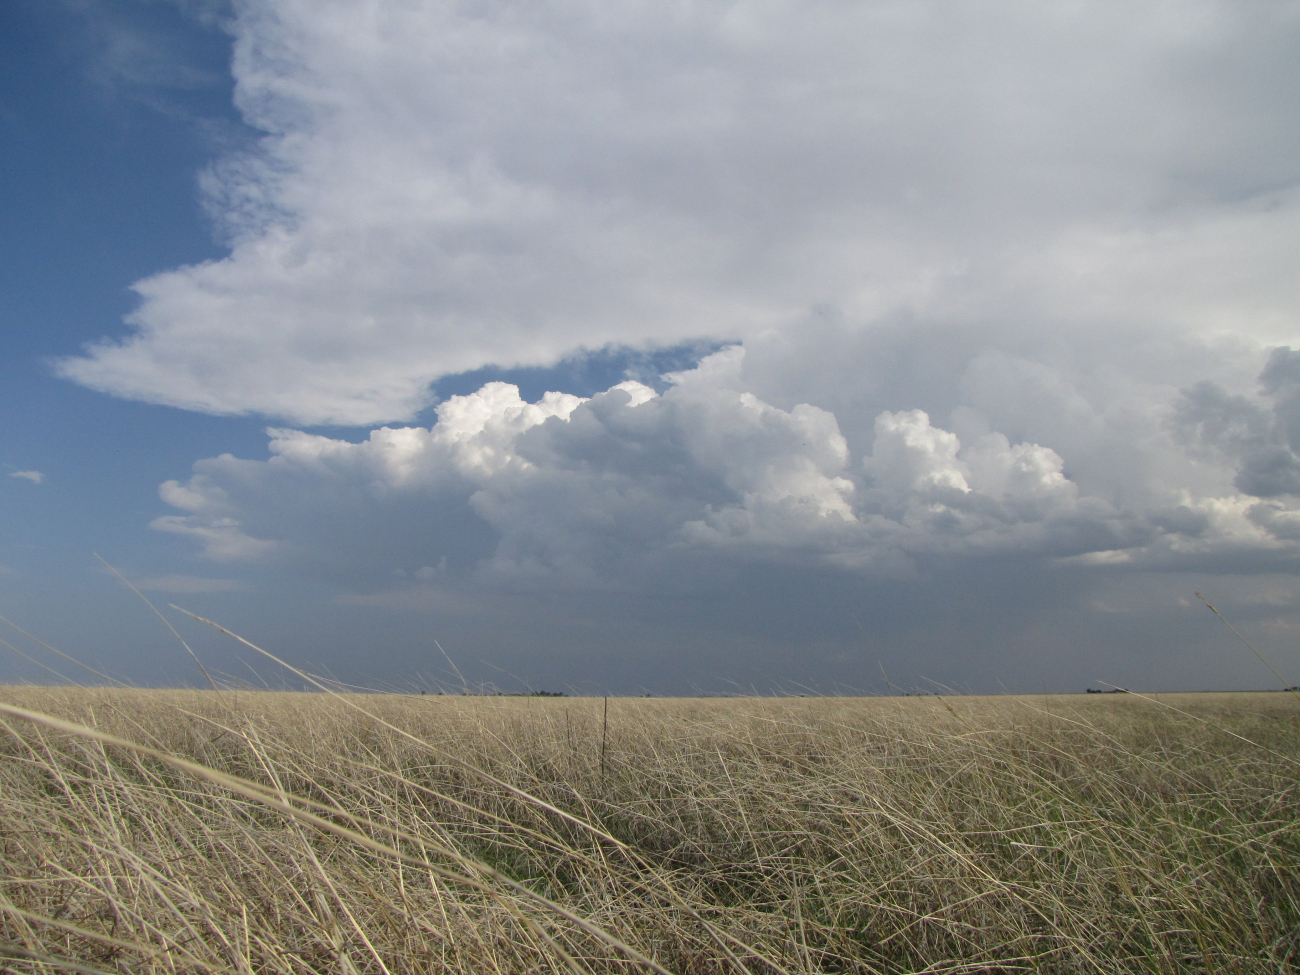 Storm clouds seen over a wheat field near Childress